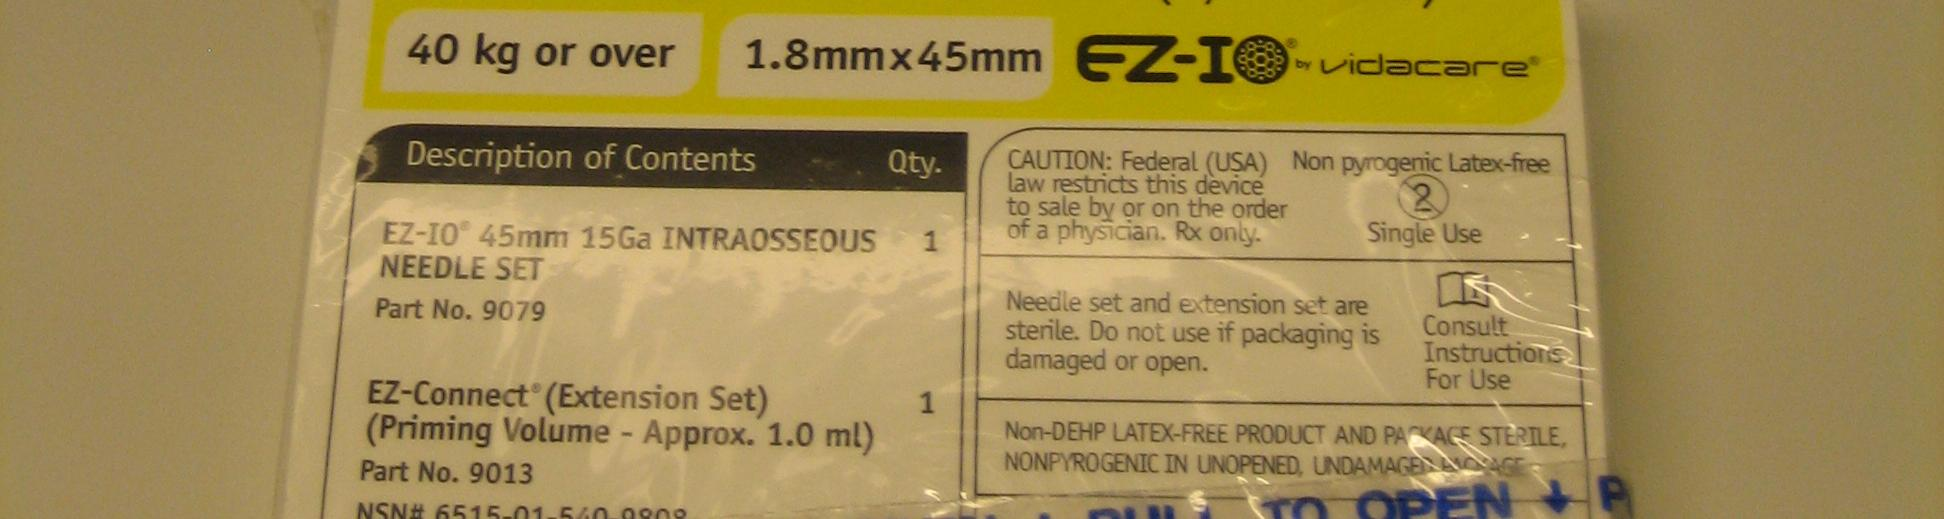 (Vidacare EZ-IO needle sets.) 4.